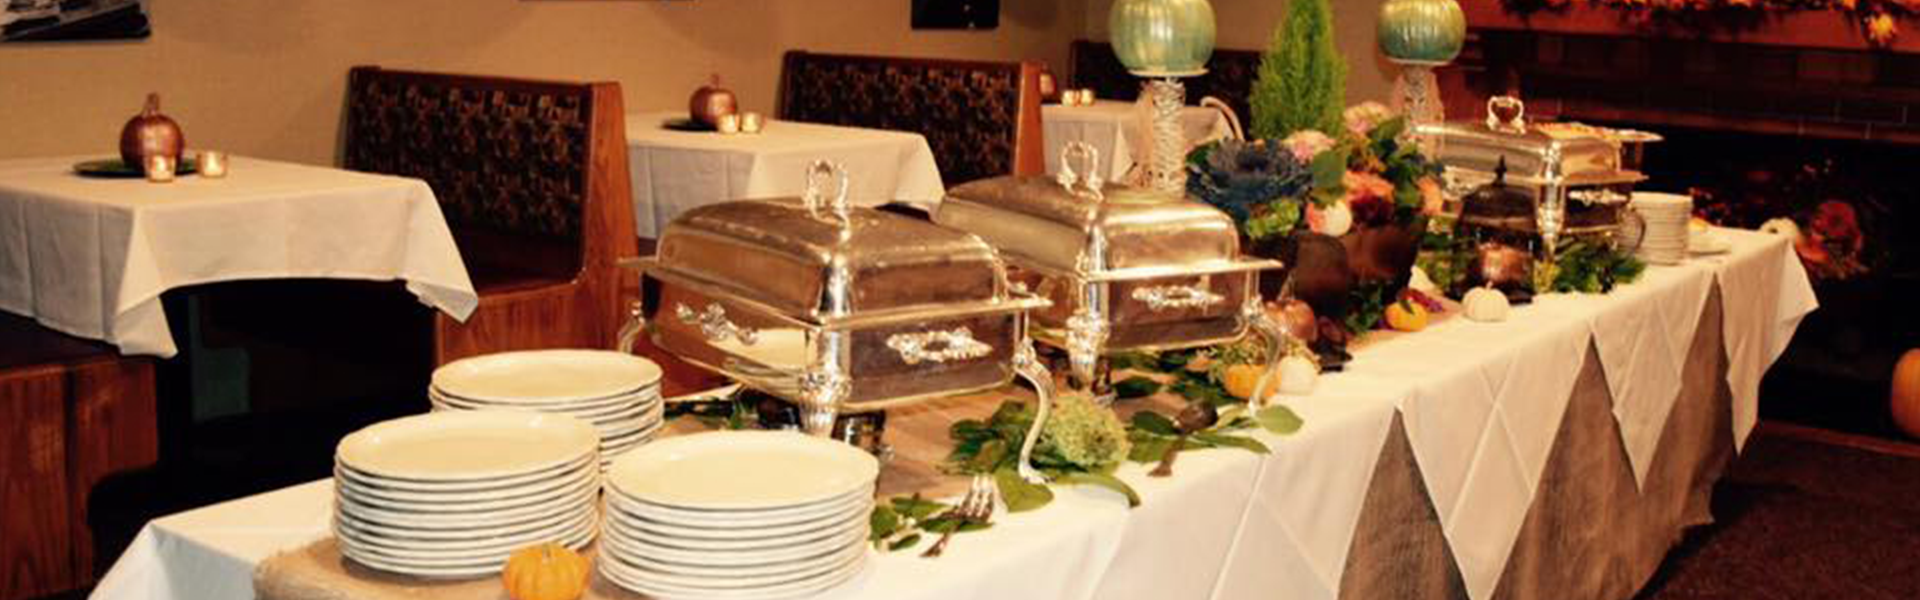 Banquet Table | Parties & Events | The Original Pancake House Chicago, IL